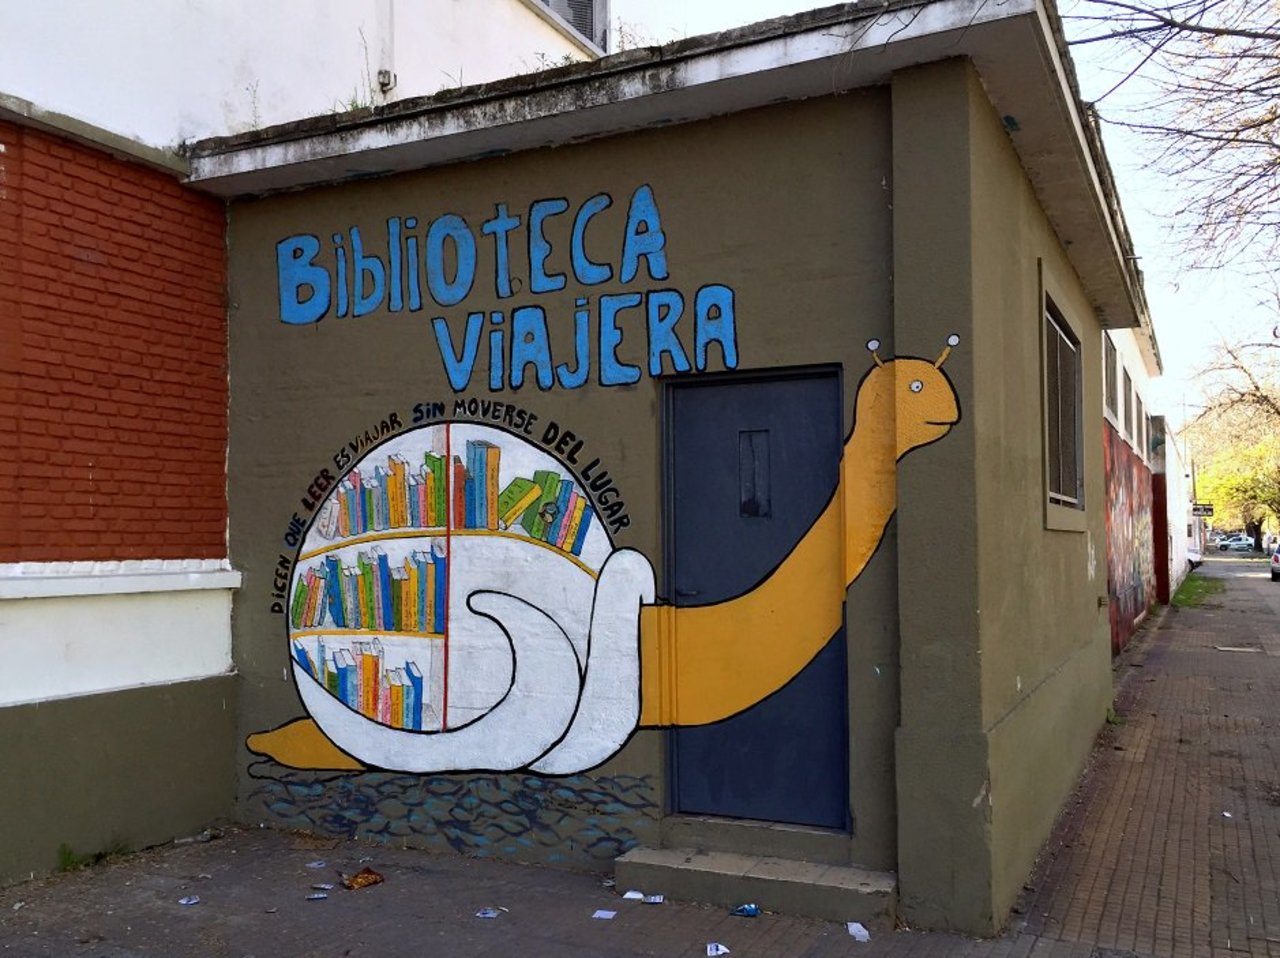 RT @DickieRandrup: #Graffiti de hoy: <<El caracol de los libros >> calle 22,63y64 #LaPlata #Argentina #StreetArt #UrbanArt #ArteUrbano https://t.co/FksUsLgotp